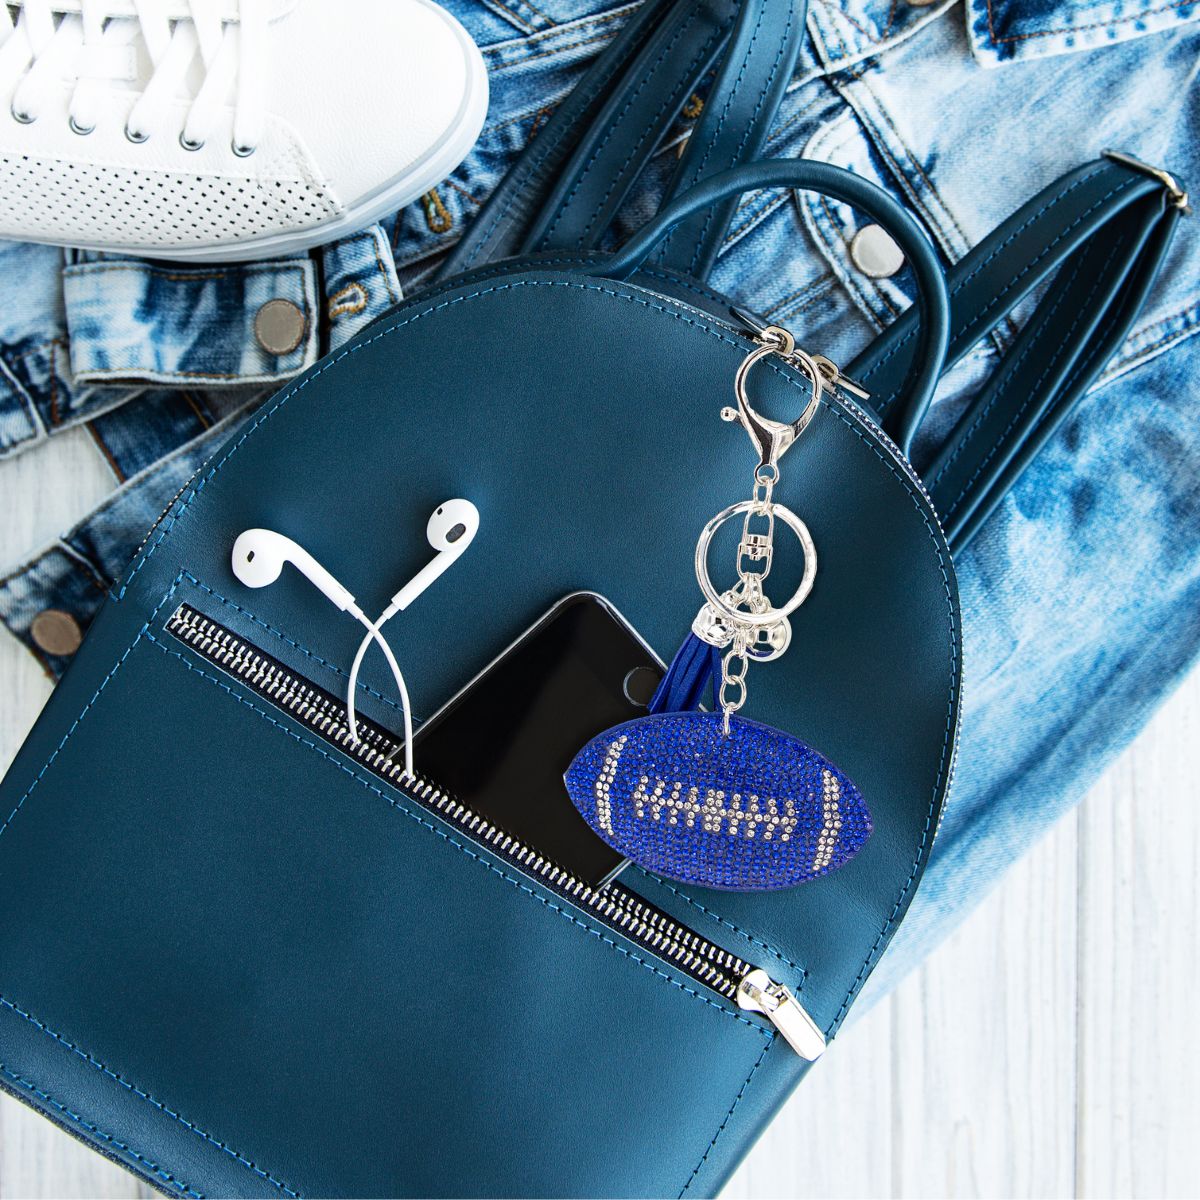 Blue Football Keychain Bag Charm